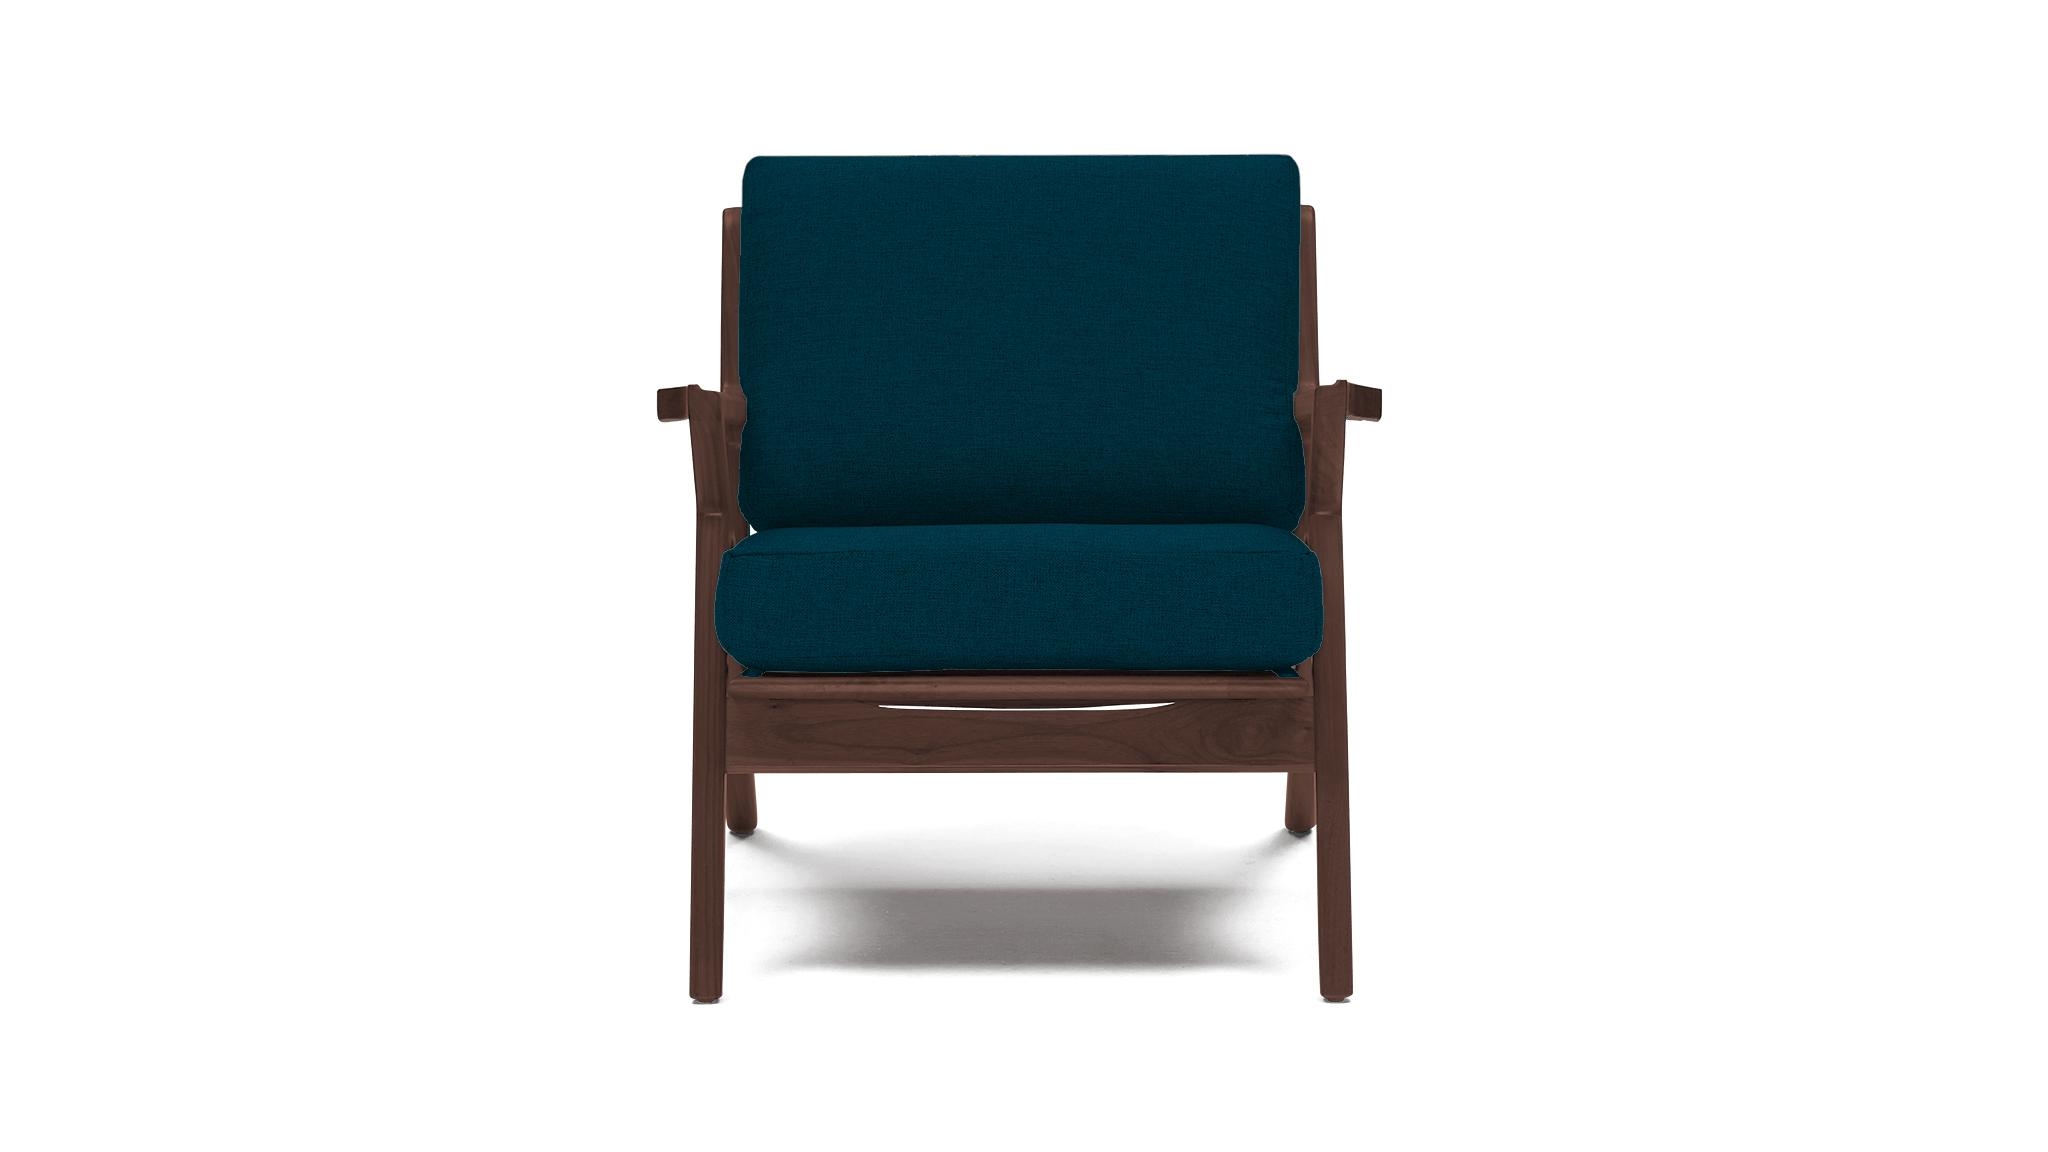 Blue Soto Mid Century Modern Concave Arm Chair - Key Largo Zenith Teal - Walnut - Image 0